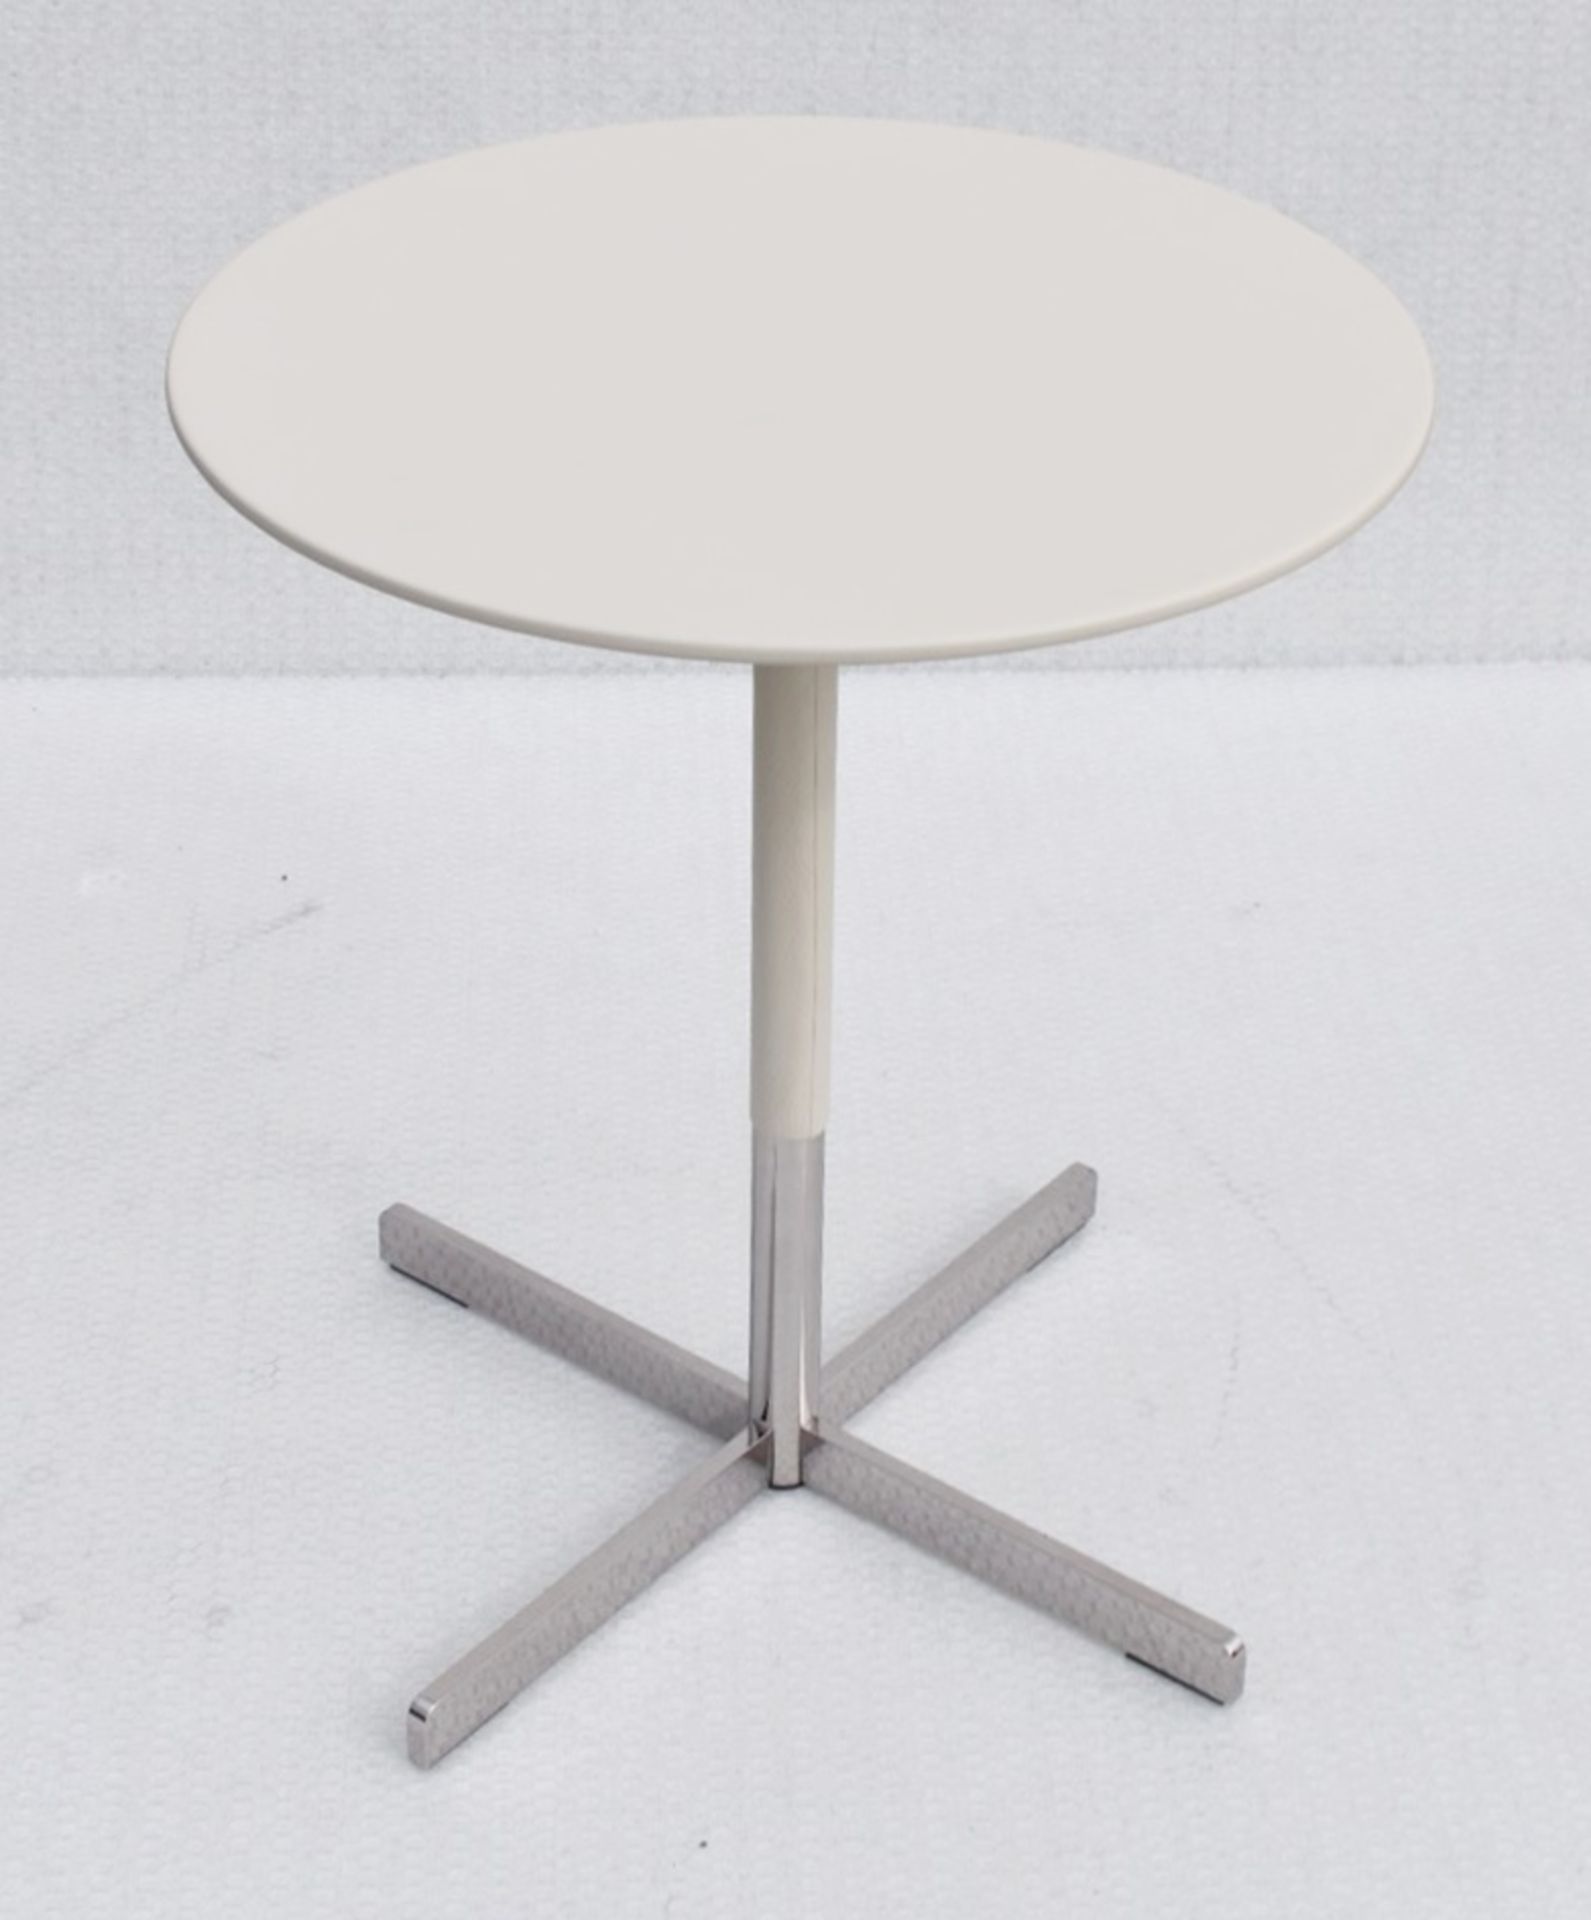 1 x POLTRONA FRAU 'Bob' Designer Leather Upholstered Coffee Table in Cream - Original Price £2,900 - Image 2 of 10